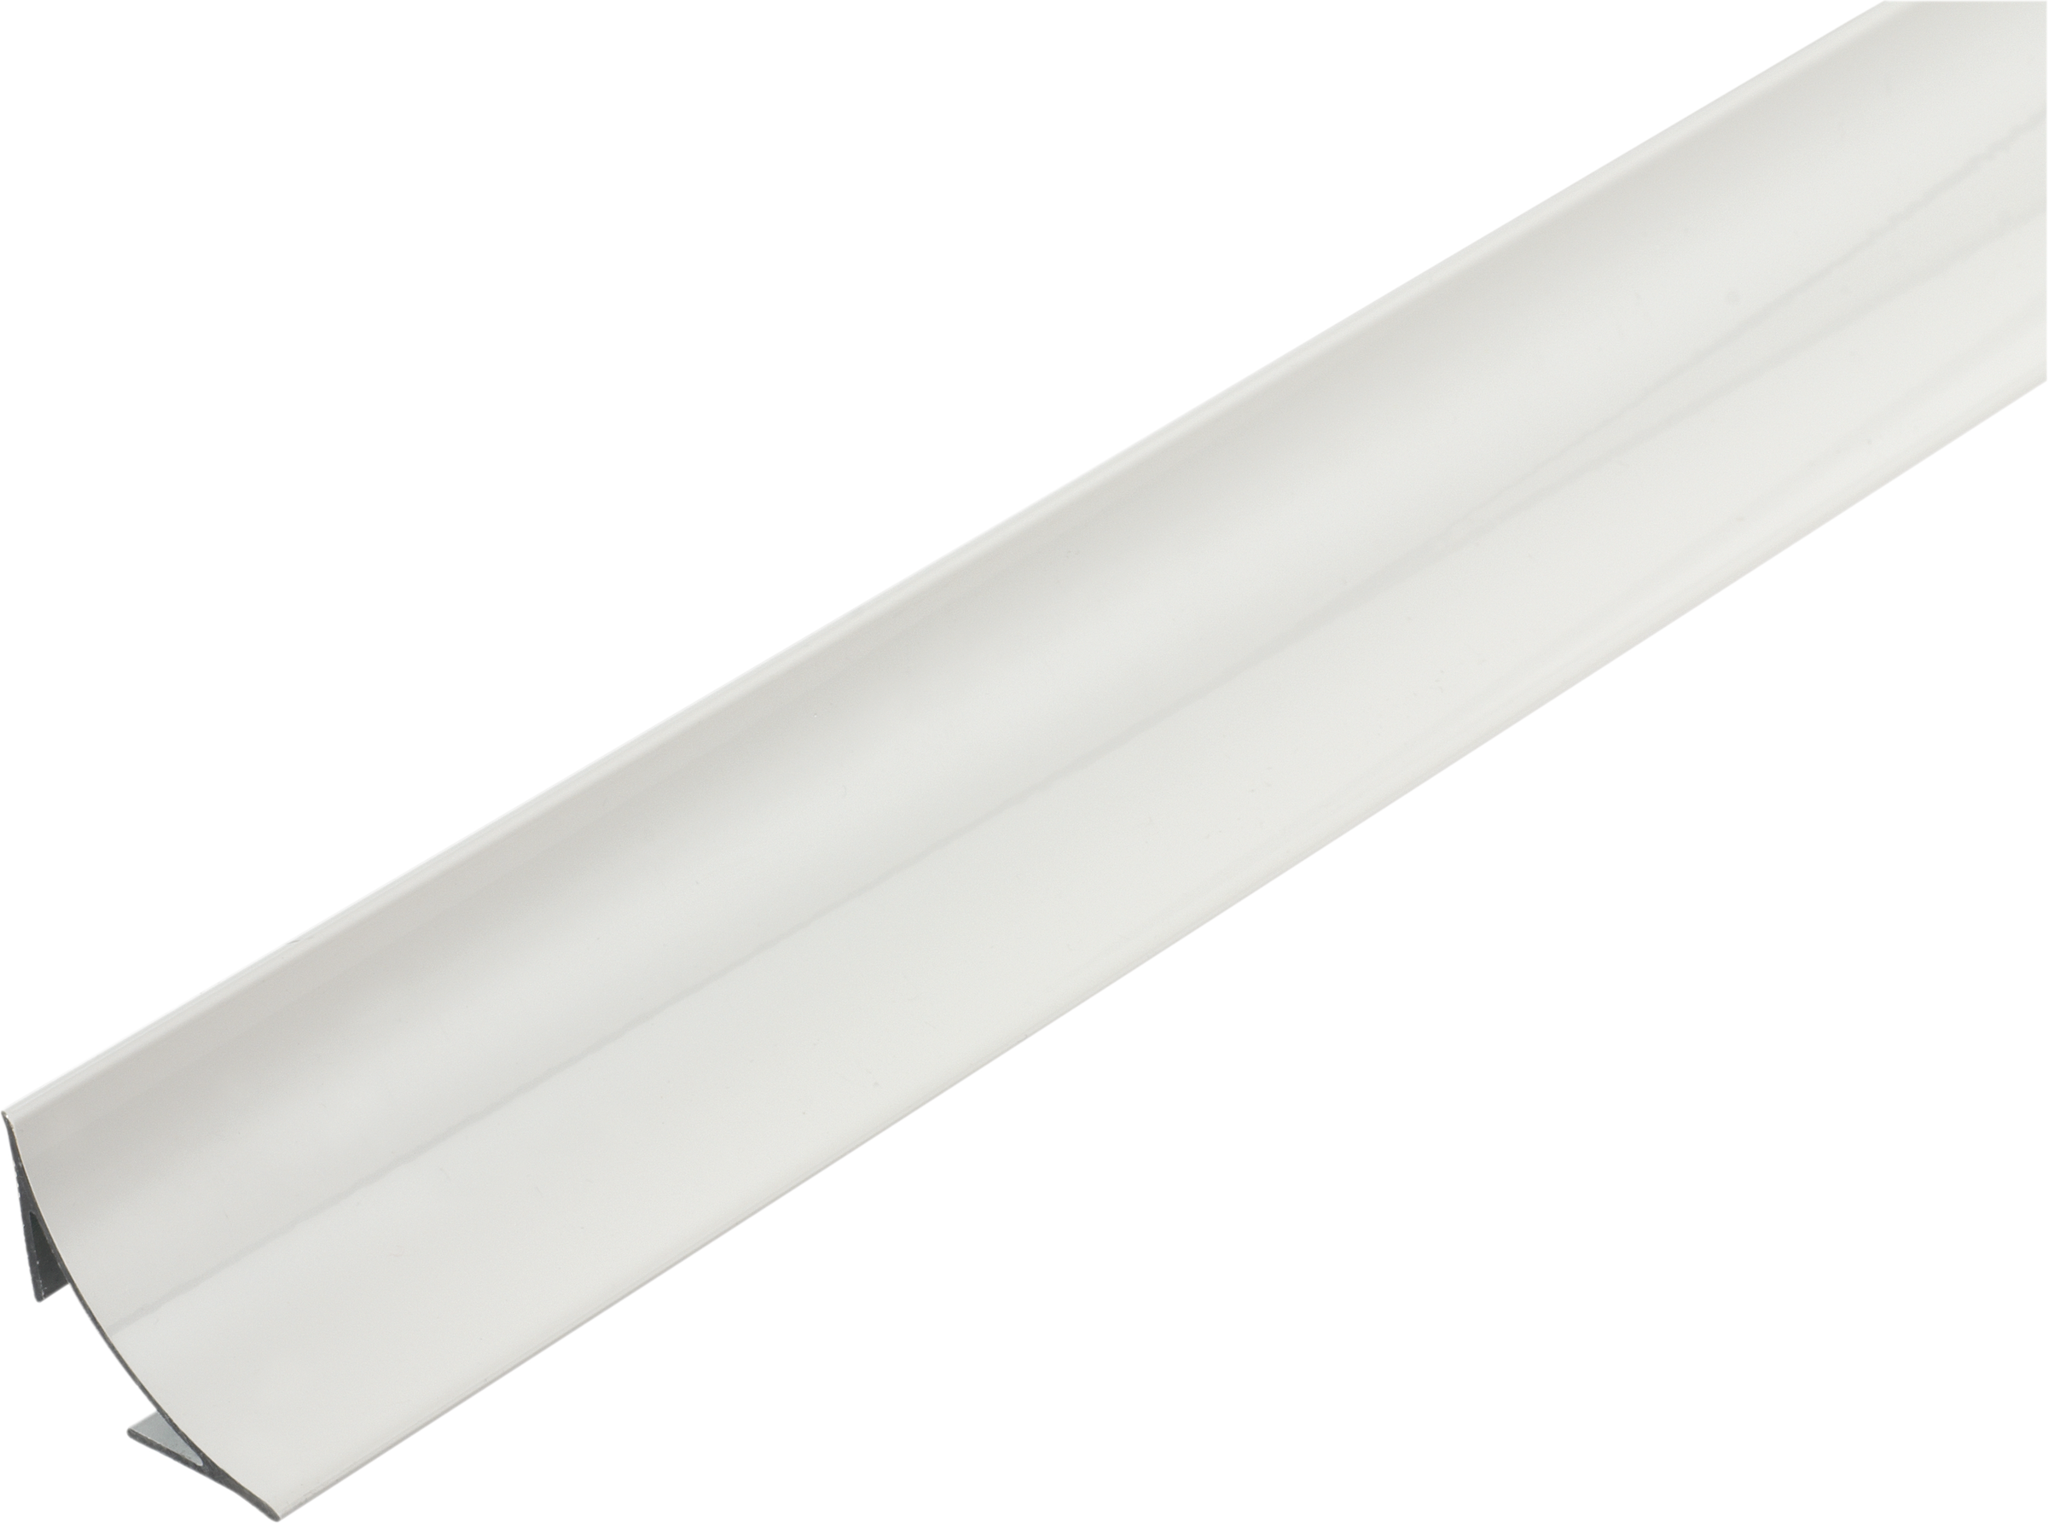 DURACOVE HK Concave Trim 1-1/8 in - Aluminum - White Anodized - Tile Edge Trim for Wall/Floor